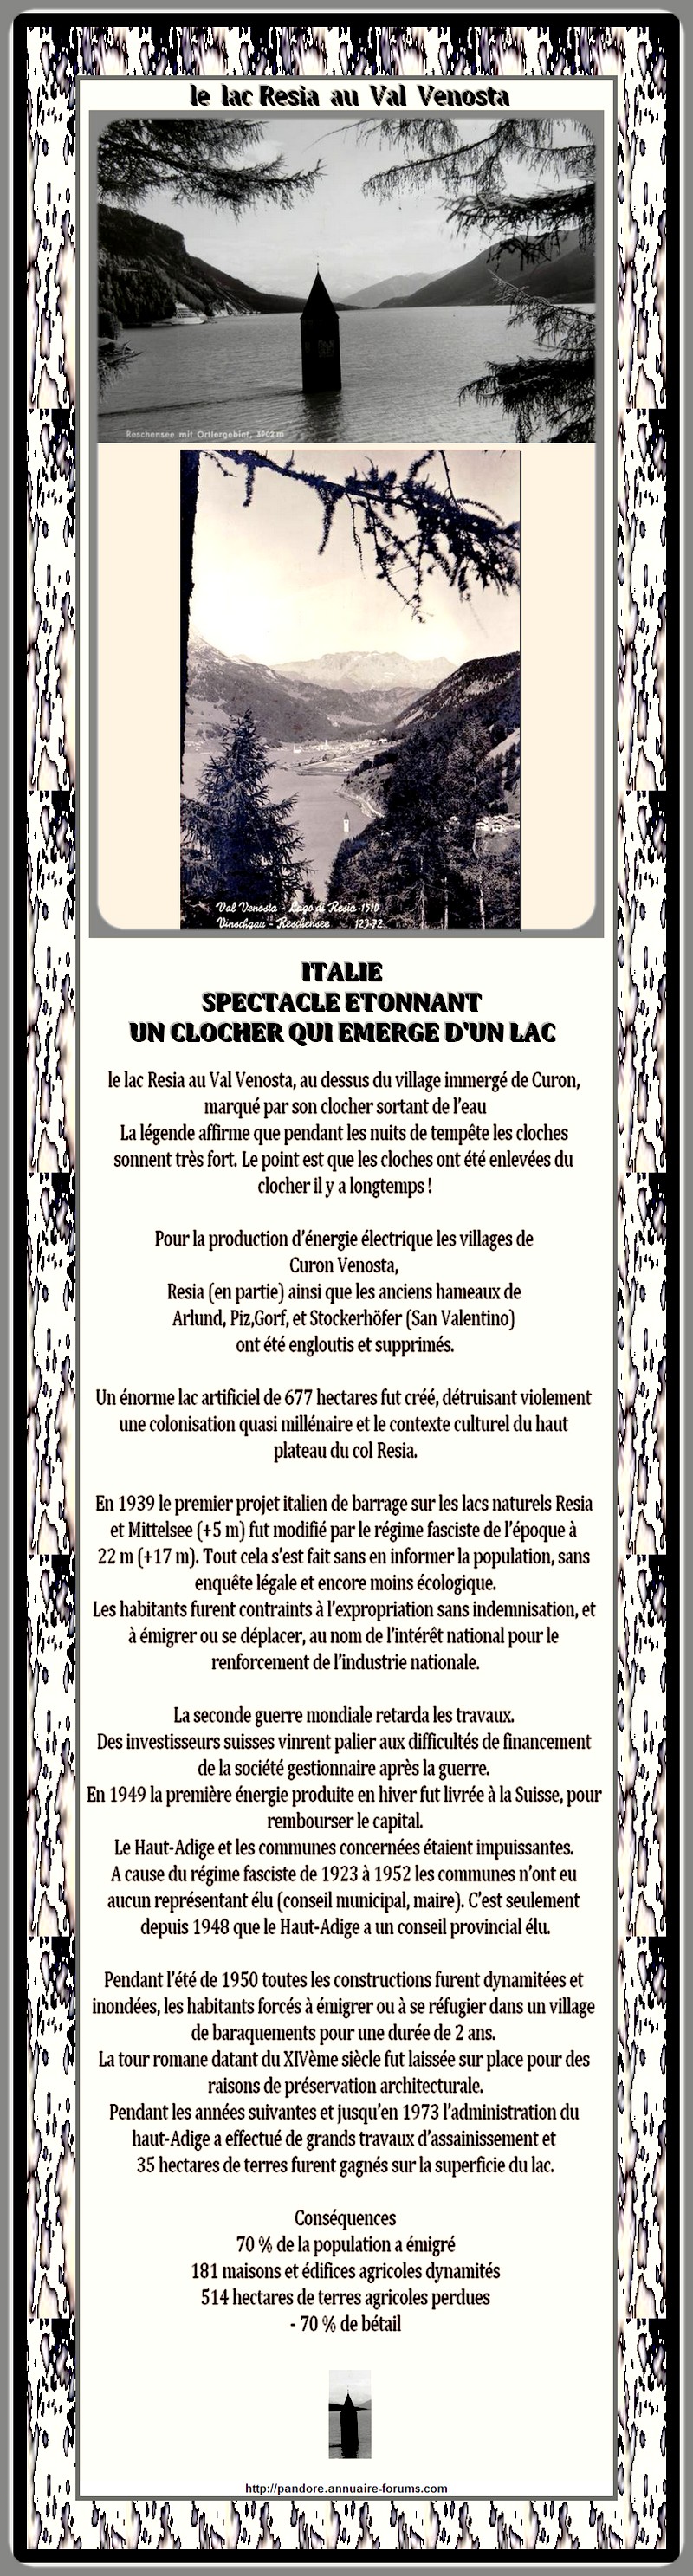 ITALIE LE LAC RESIA - UN CLOCHER QUI EMERGE DU LAC 12092311293415355410354182